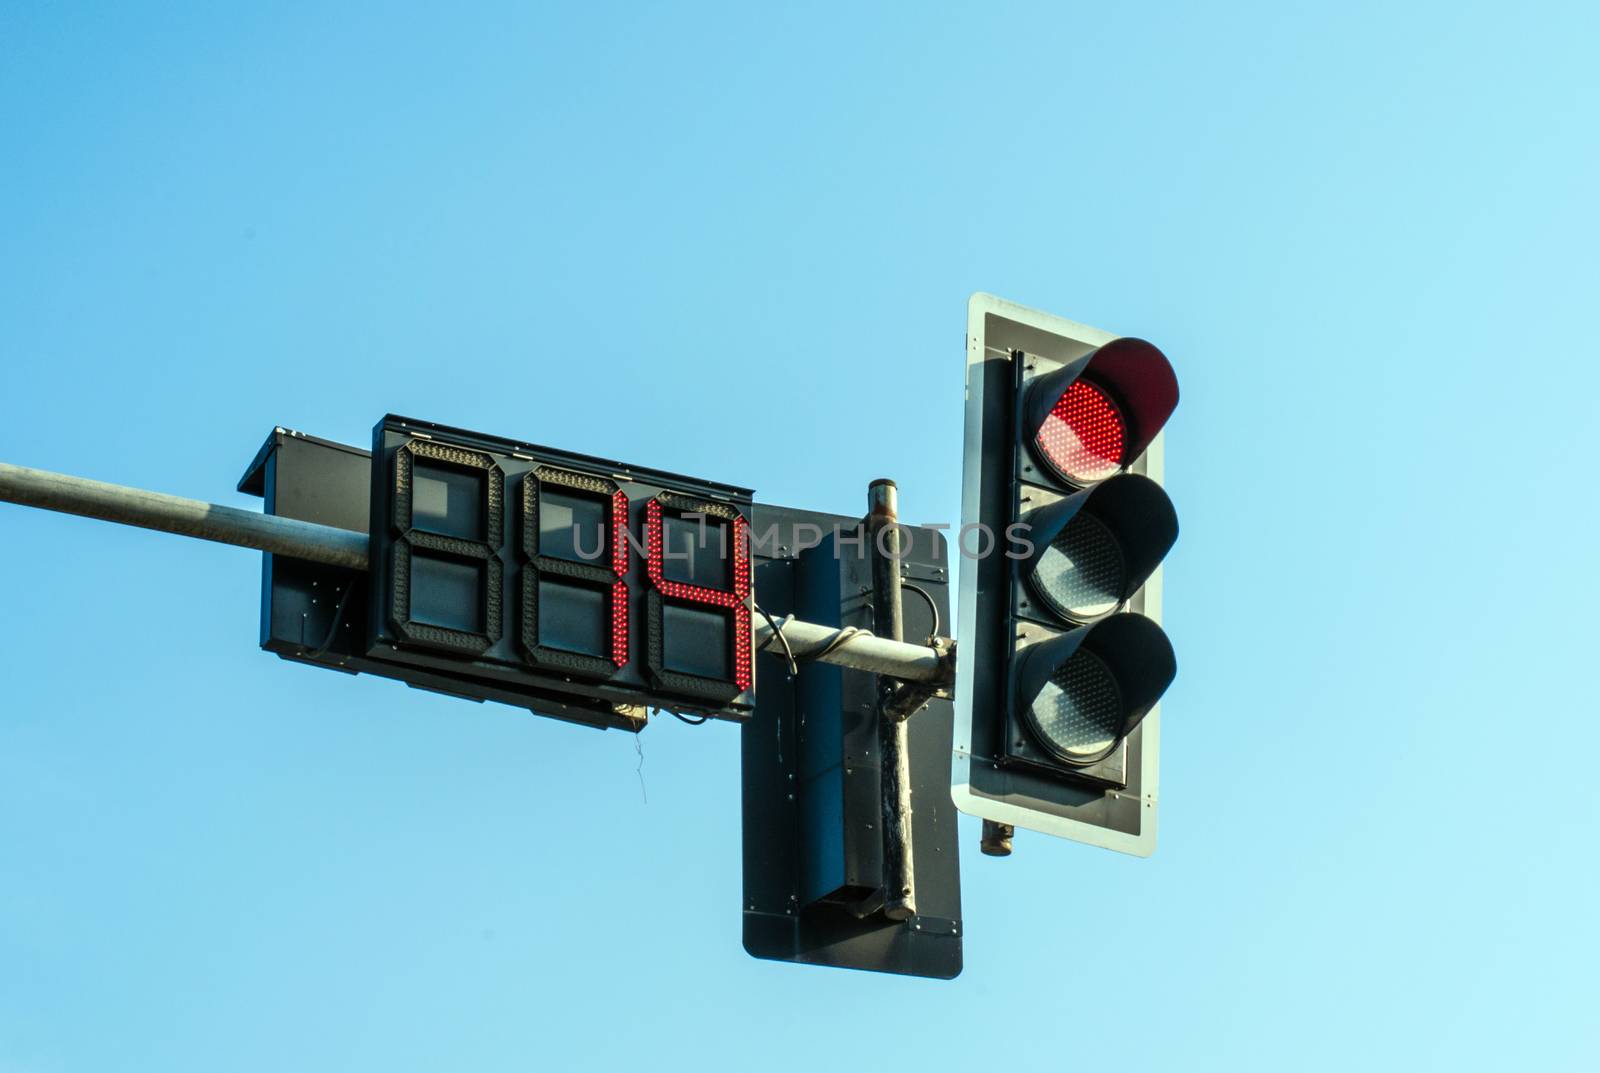 Traffic lights against sky backgrounds